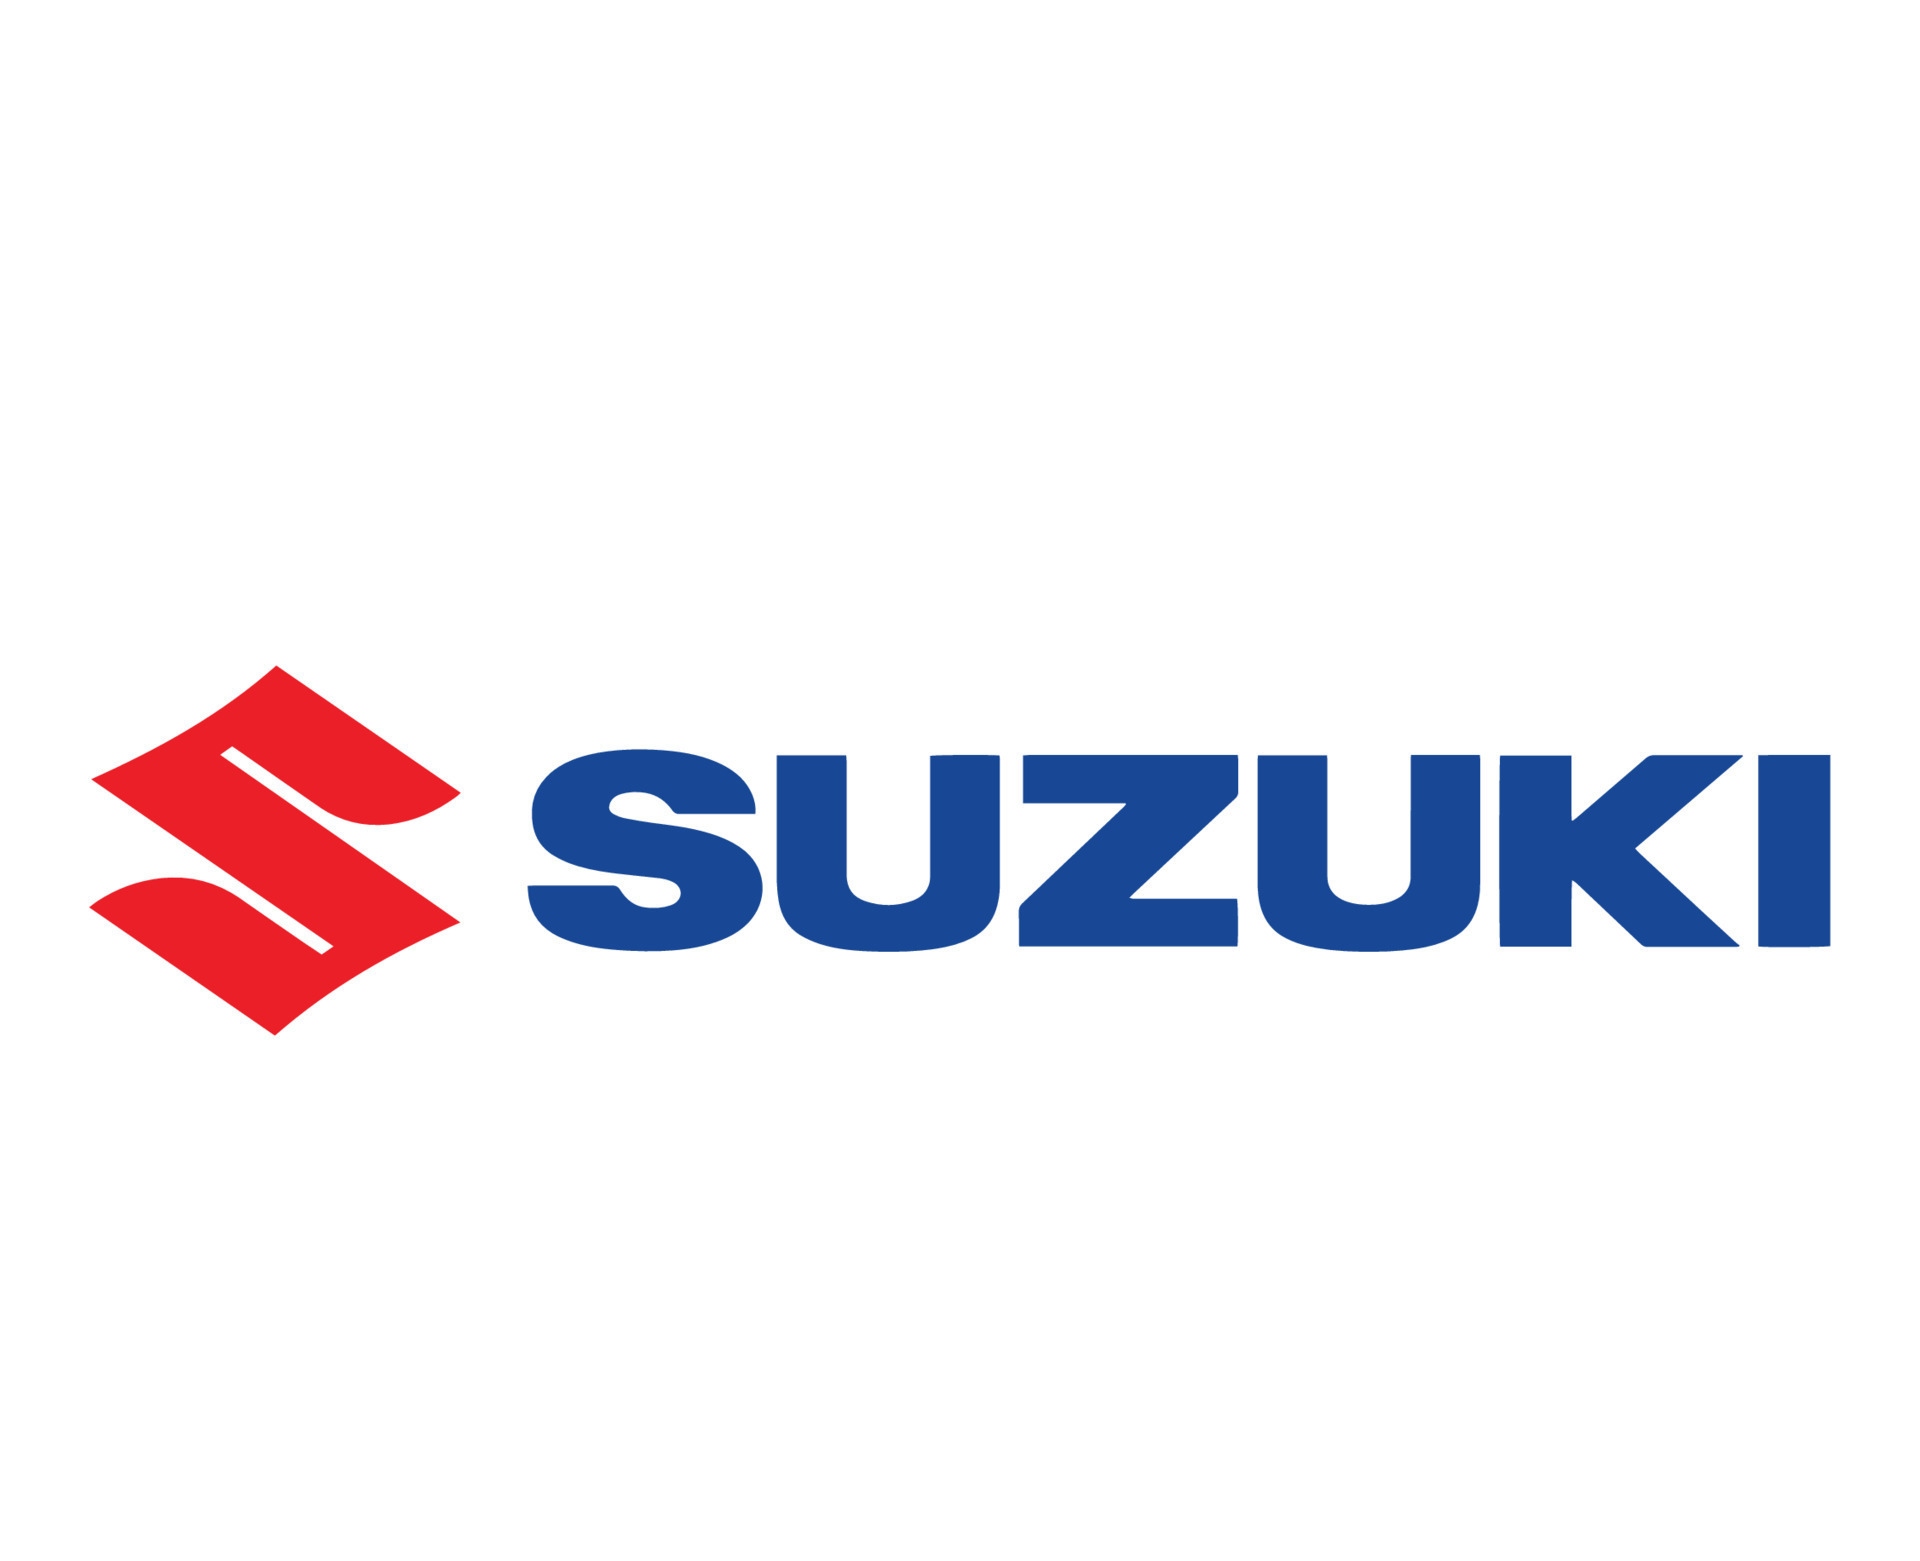 https://static.vecteezy.com/ti/gratis-vektor/p3/20927720-suzuki-marke-logo-auto-symbol-rot-mit-name-blau-design-japan-automobil-illustration-kostenlos-vektor.jpg